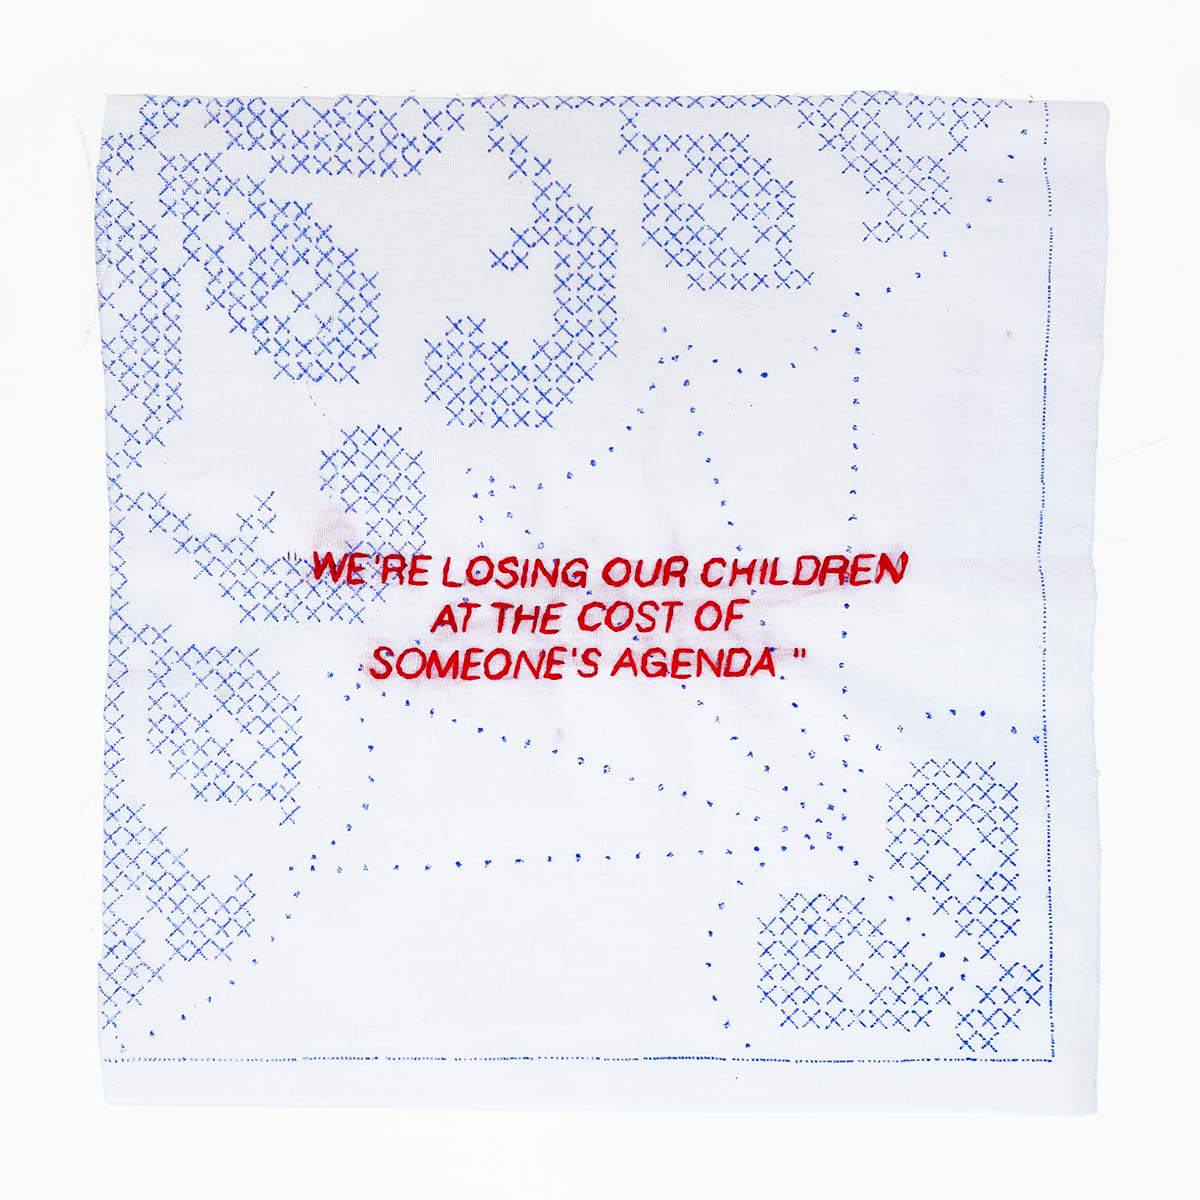 https://maydel.com/wp-content/uploads/losing-our-children-ciara-leroy-gun-sense-craftivism-embroidery.jpg